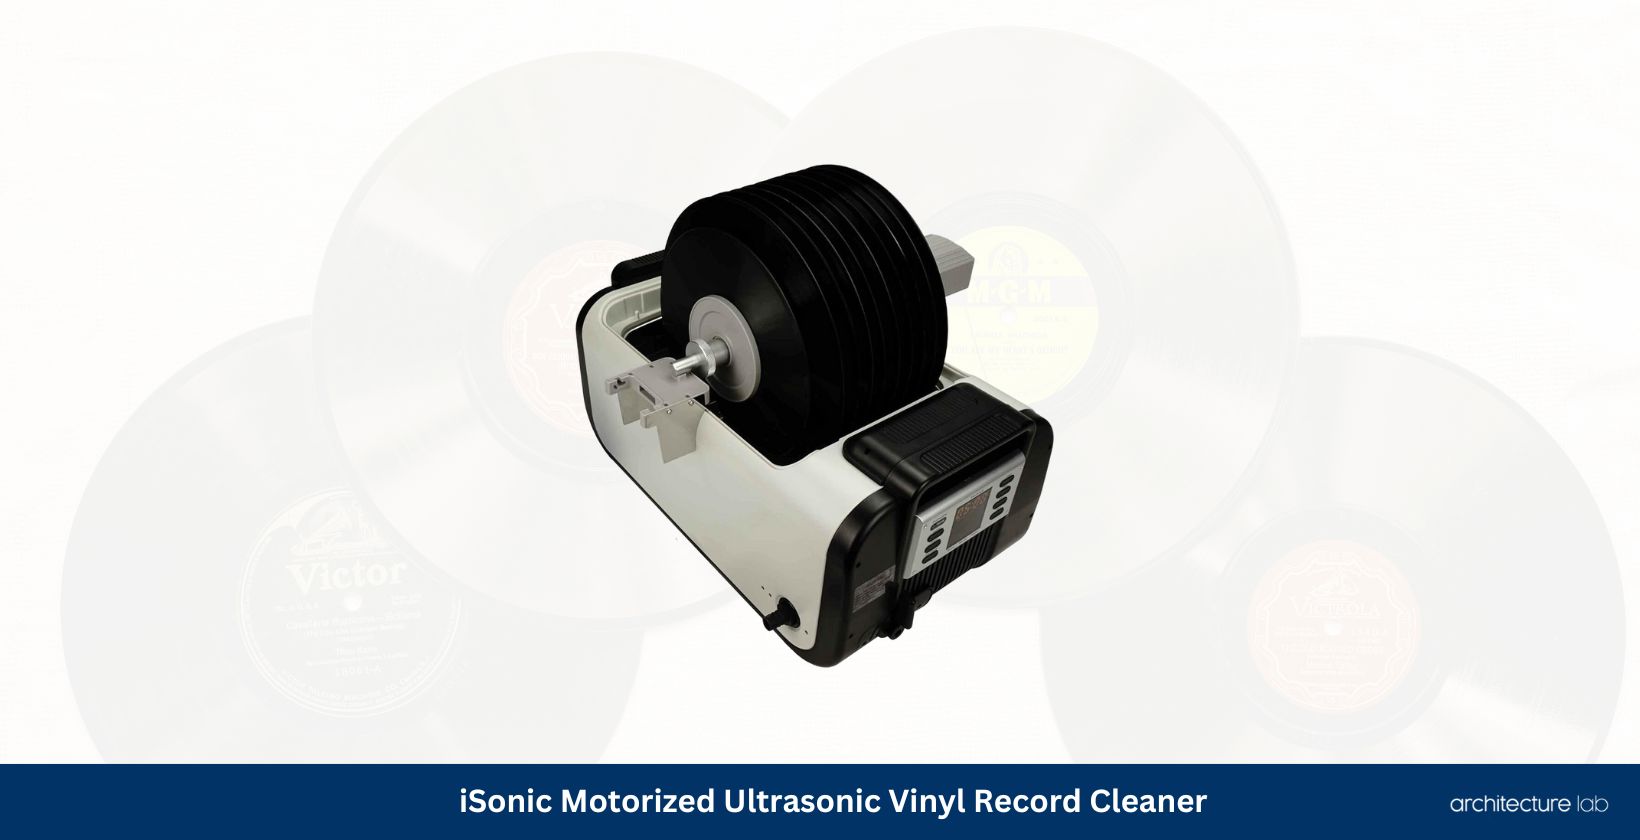 Isonic motorized ultrasonic vinyl record cleaner